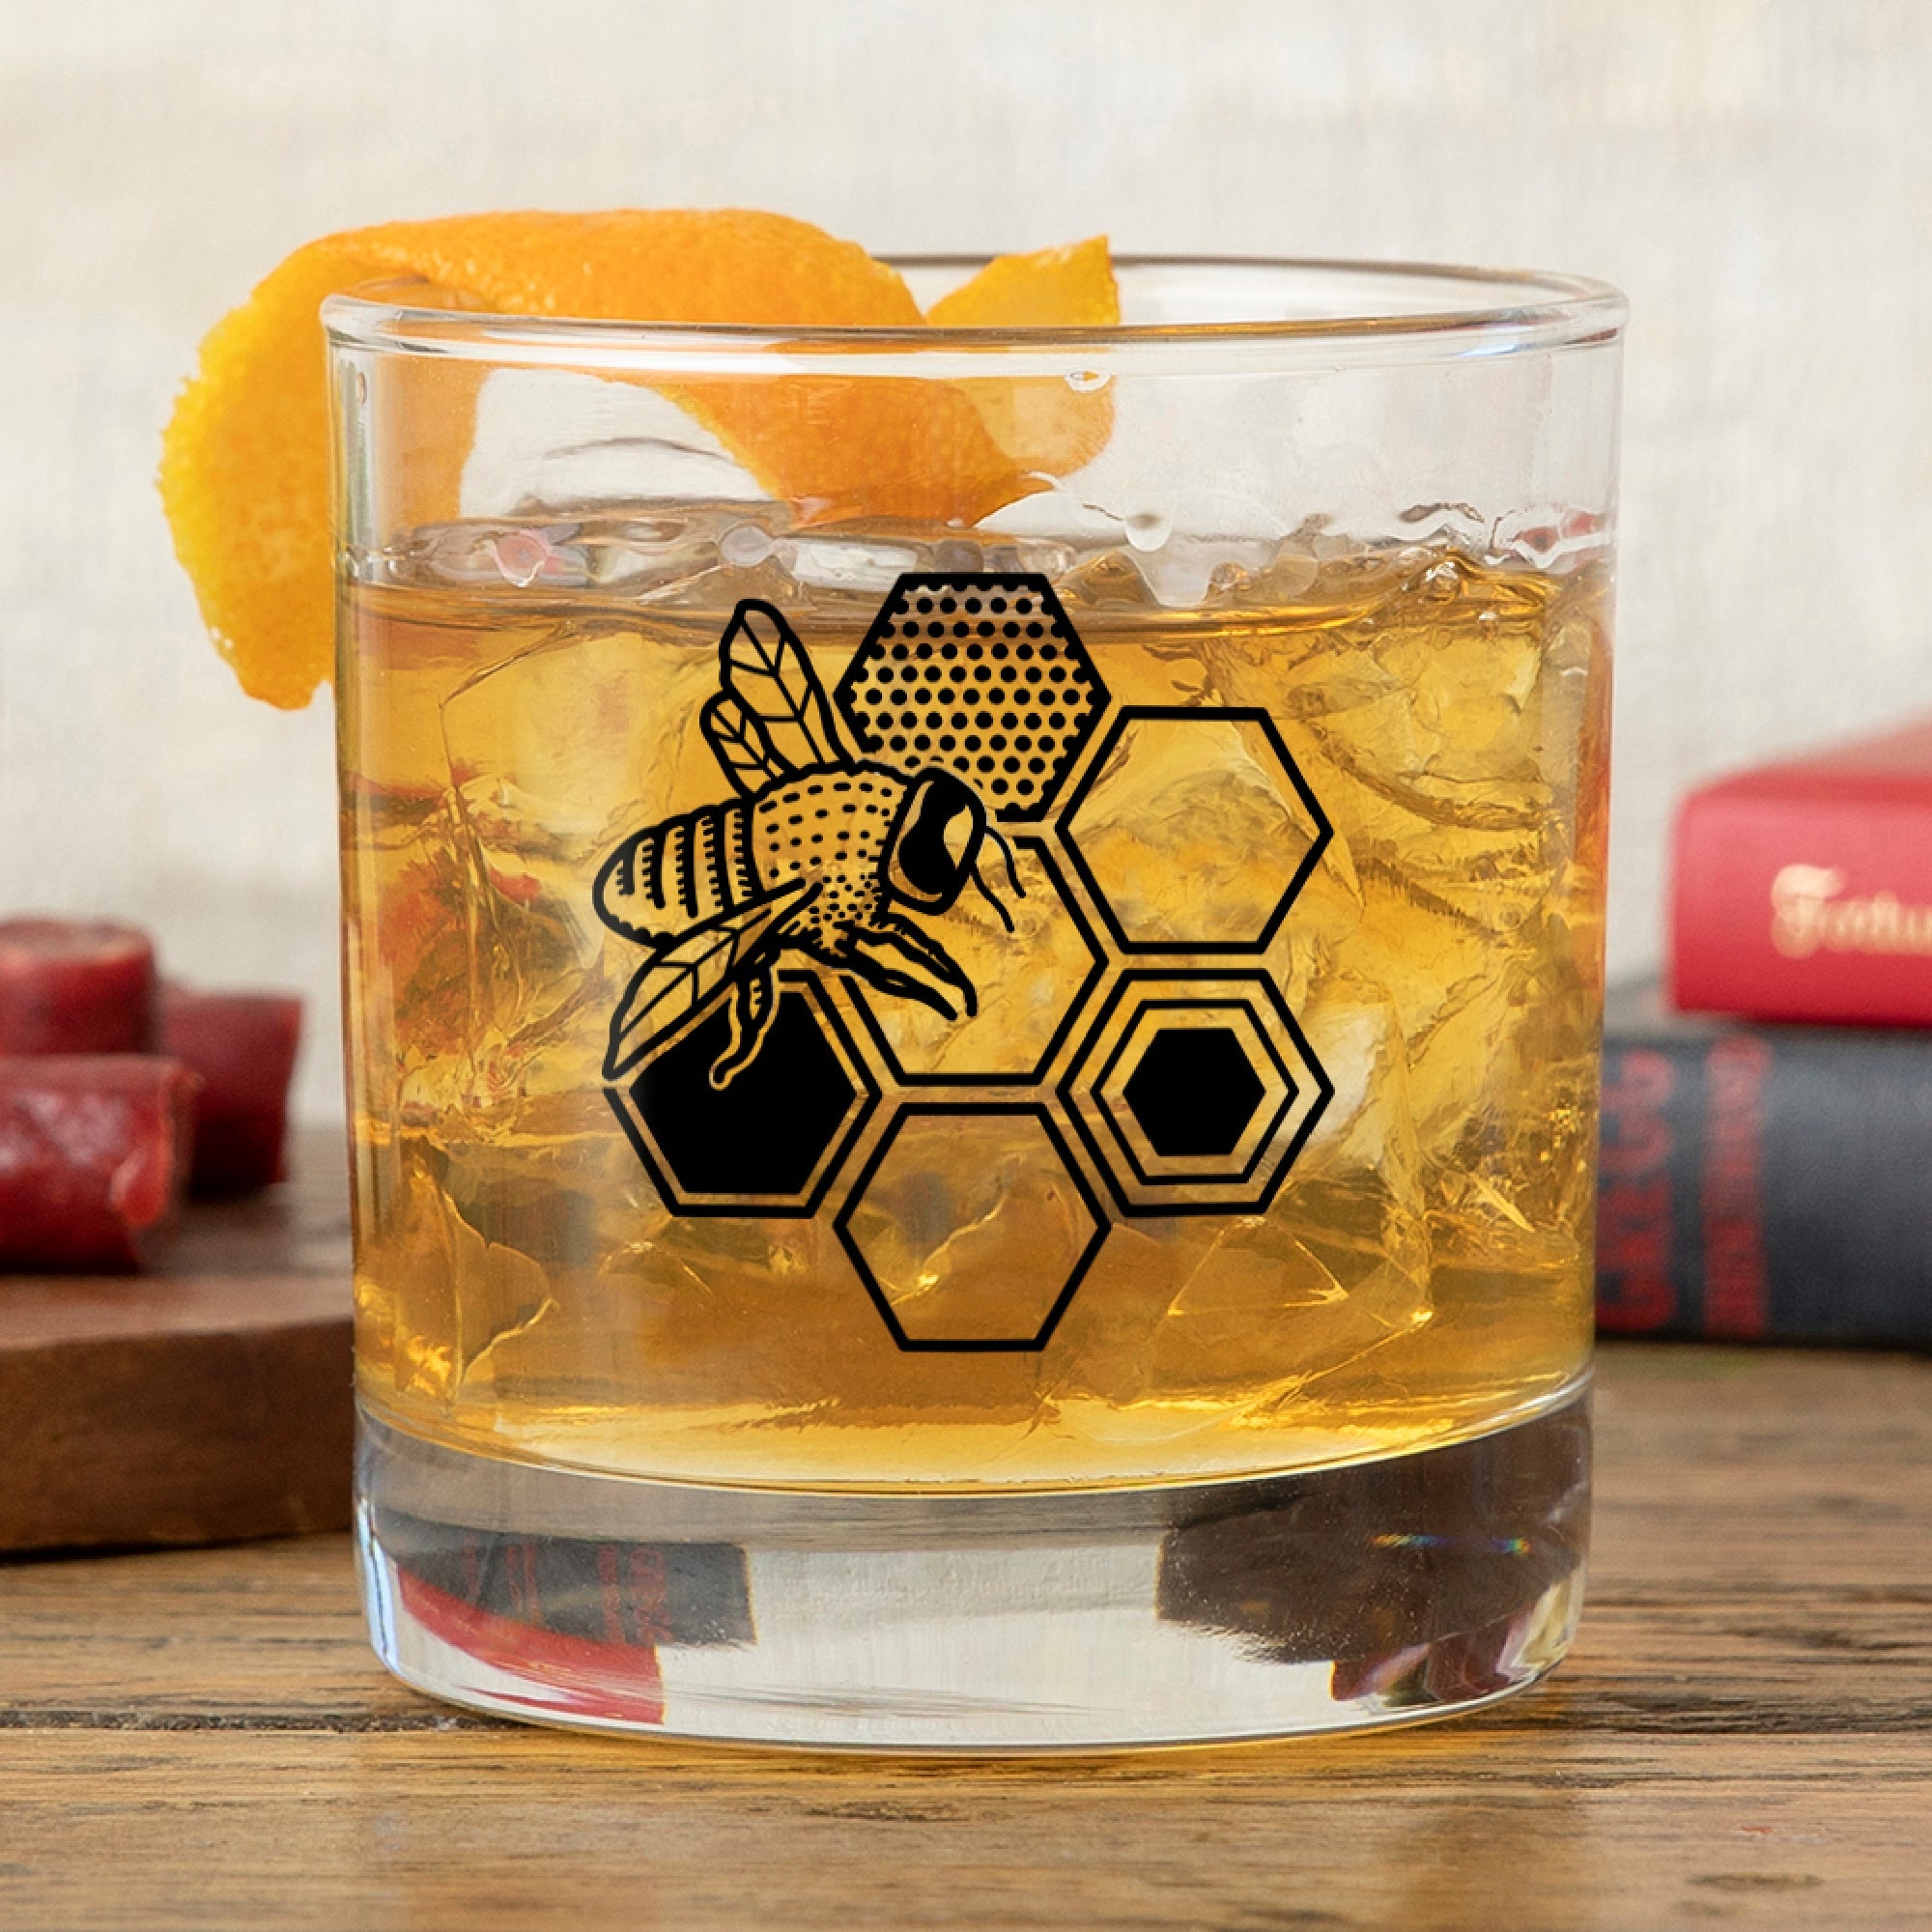 Honeybee Whiskey Glass - Two Little Fruits